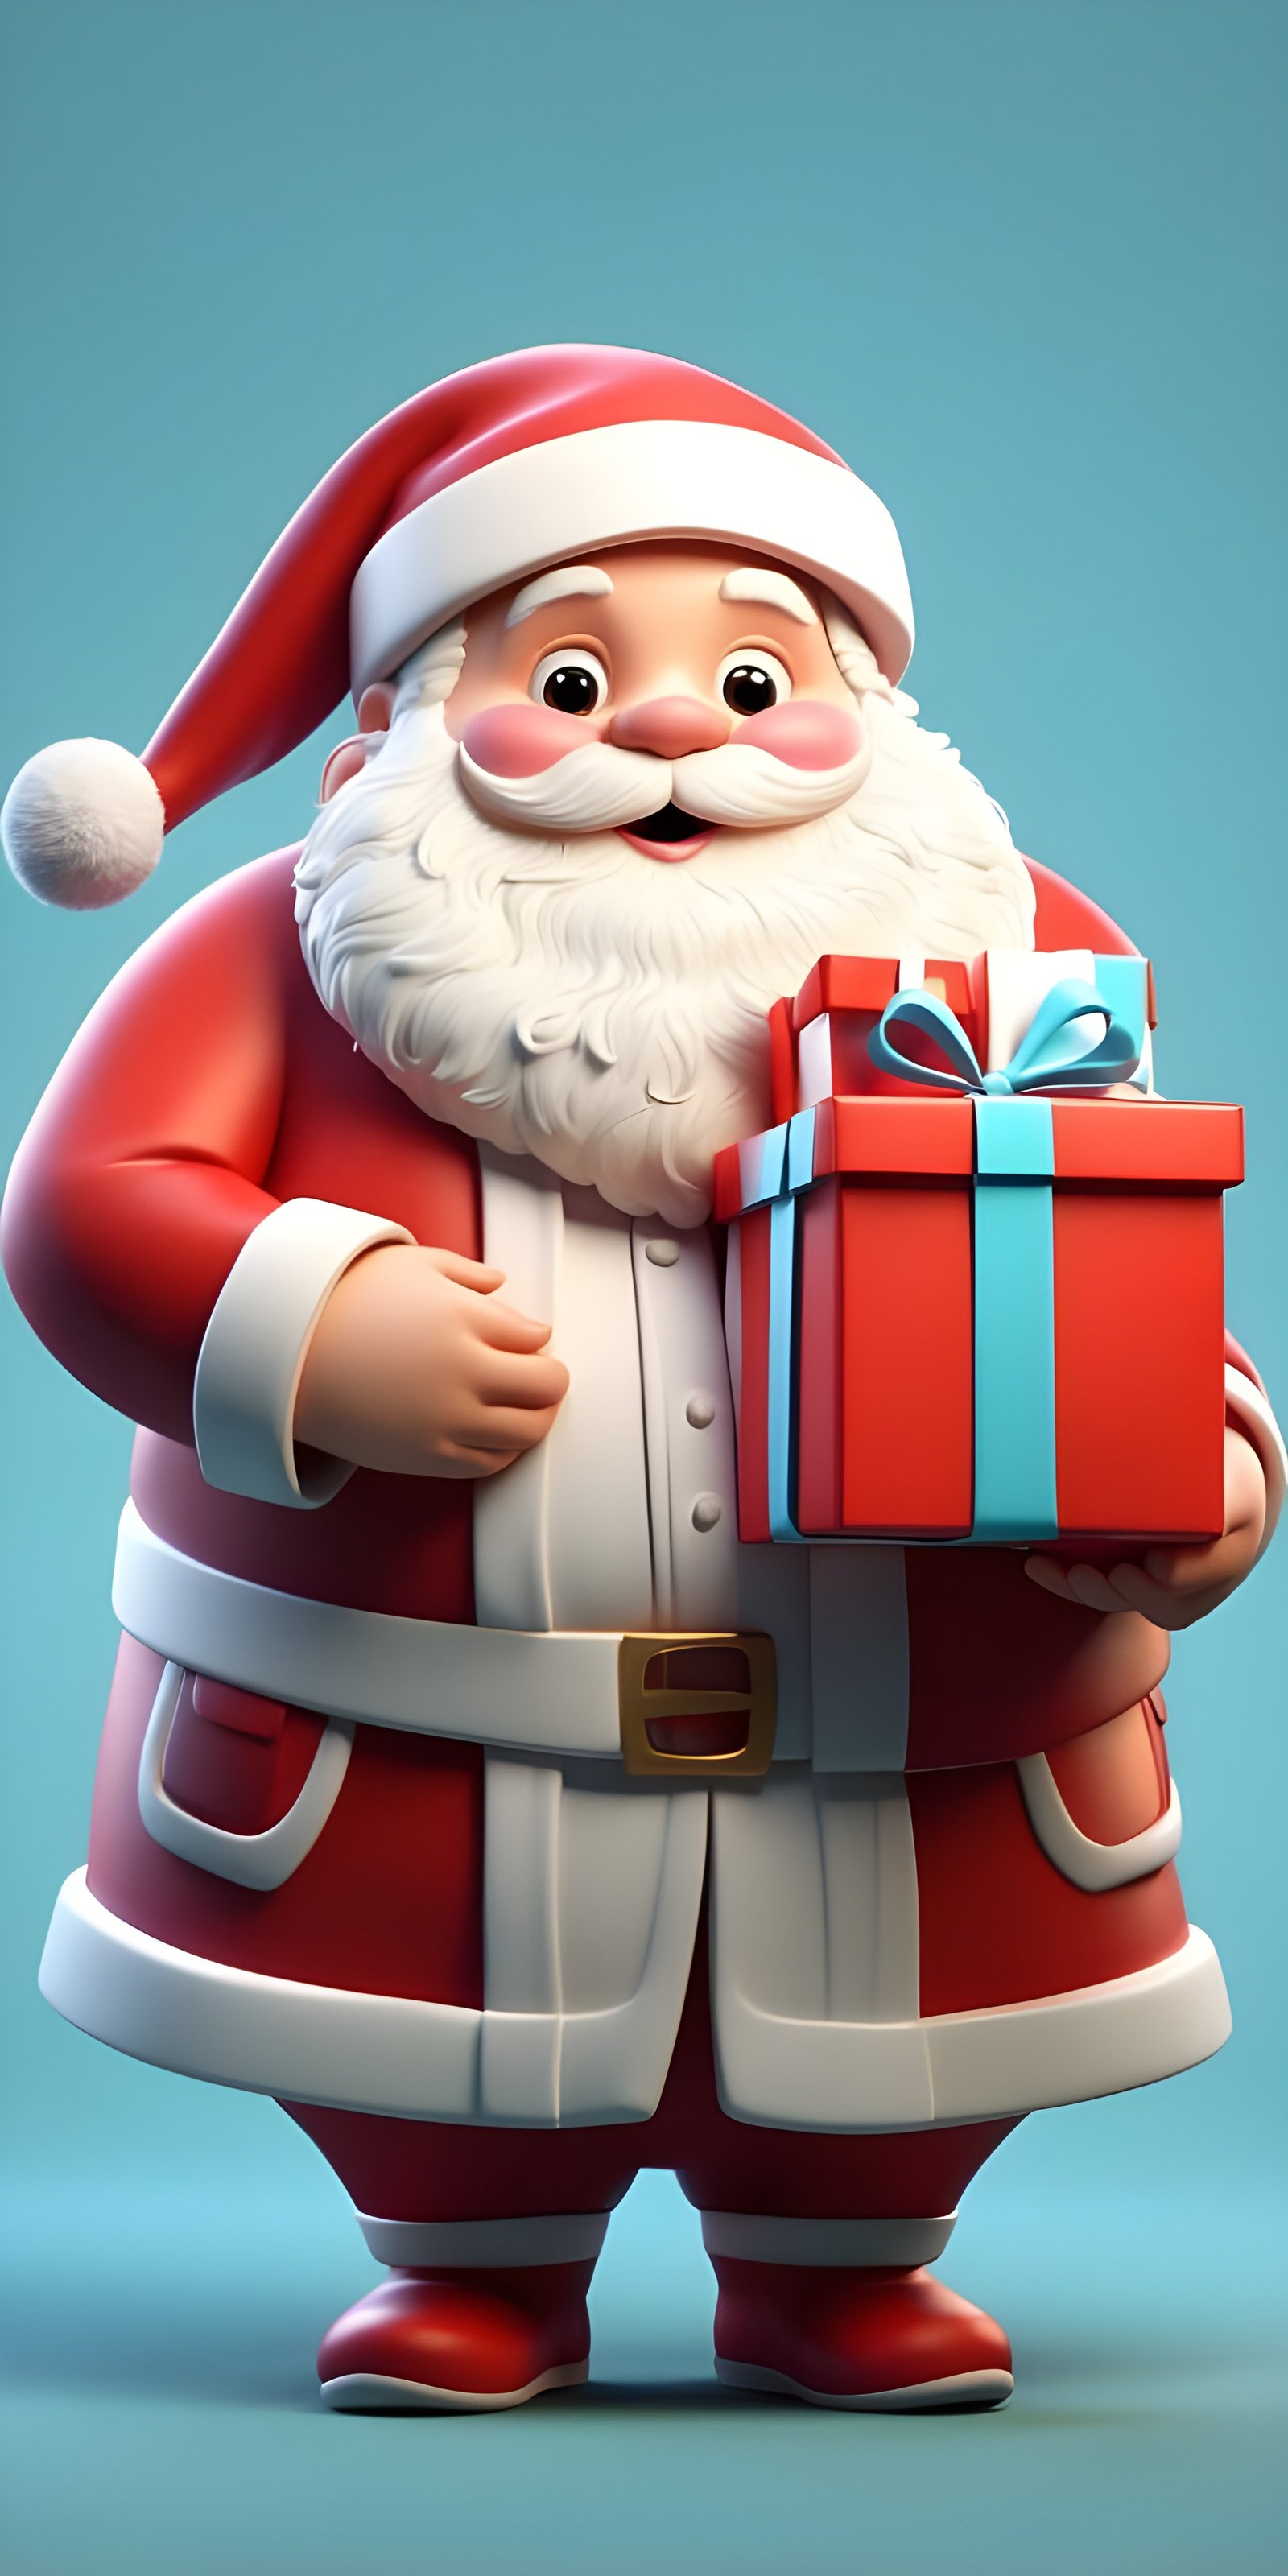 Cute Christmas Wallpaper Santa with gifts